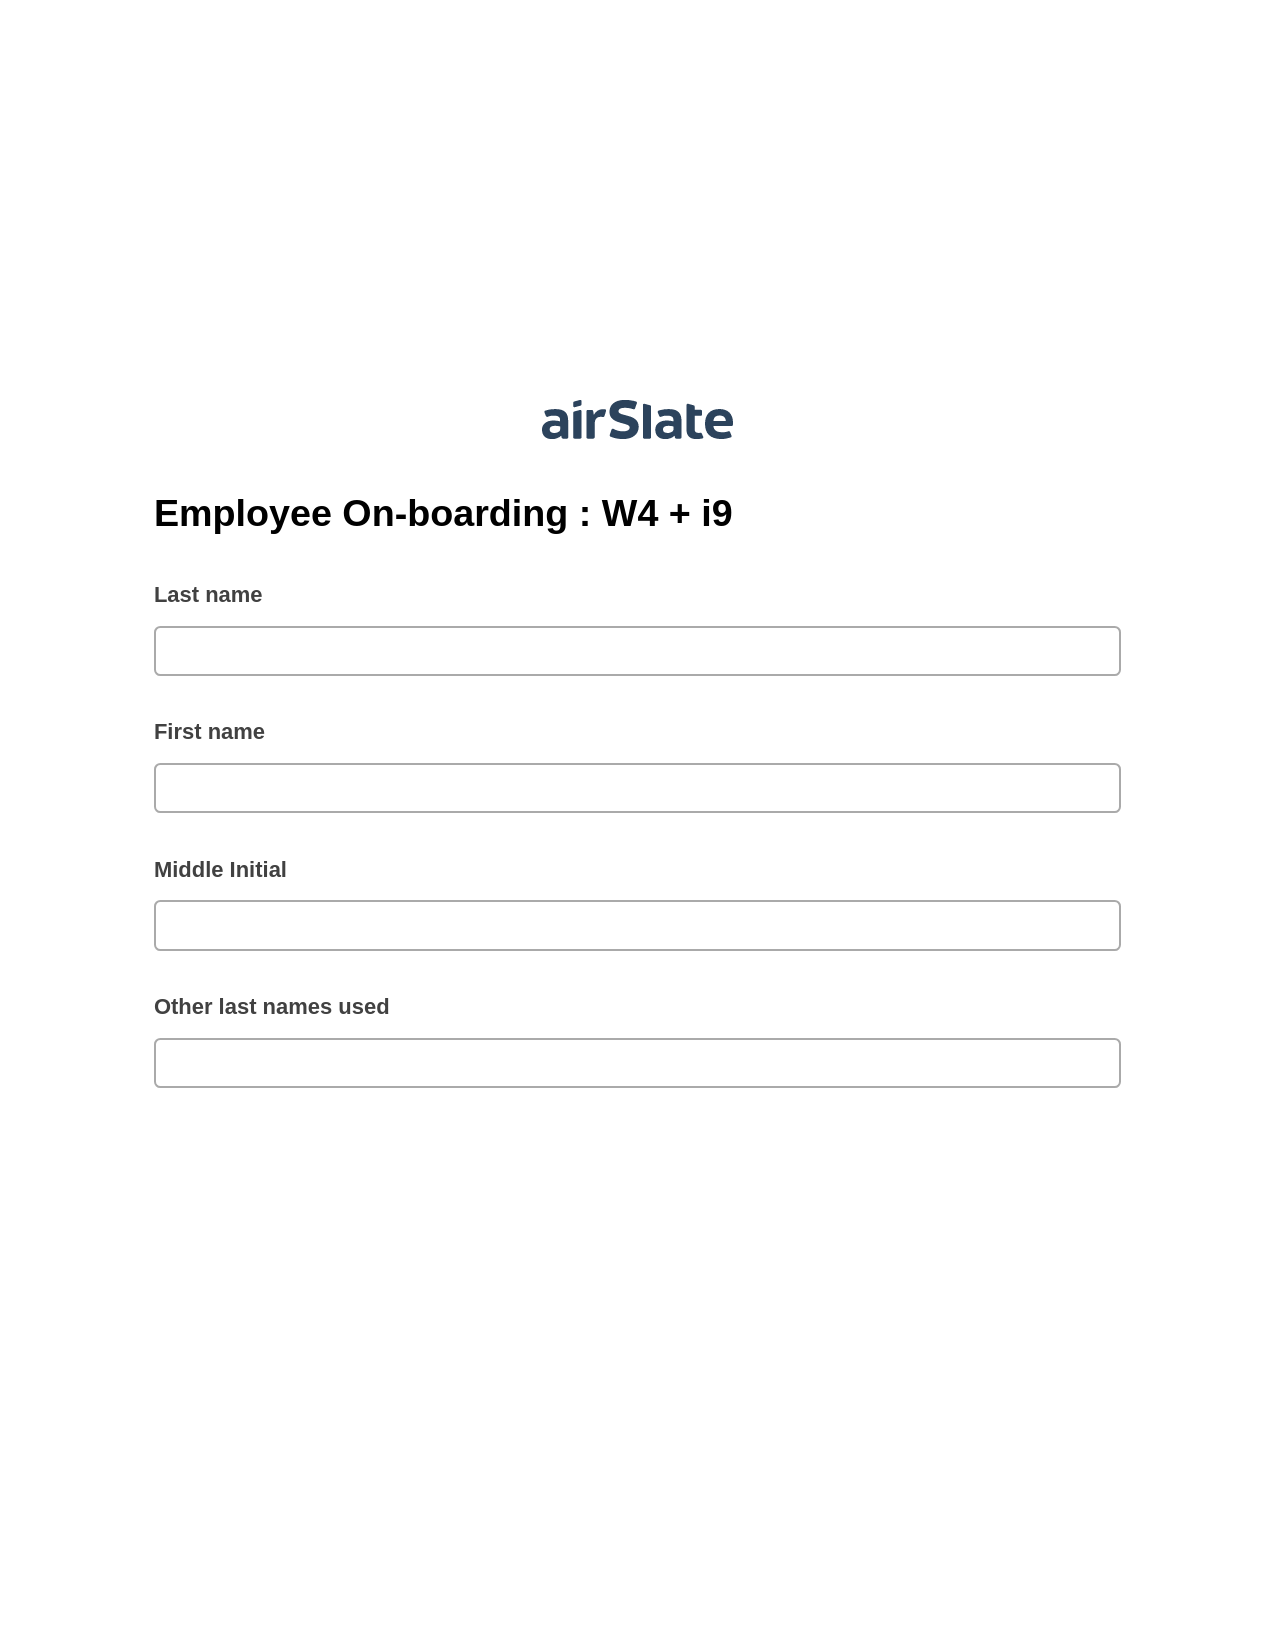 Multirole Employee On-boarding : W4 + i9 Pre-fill from Litmos Bot, Assign Slate Name Bot, Export to Google Sheet Bot